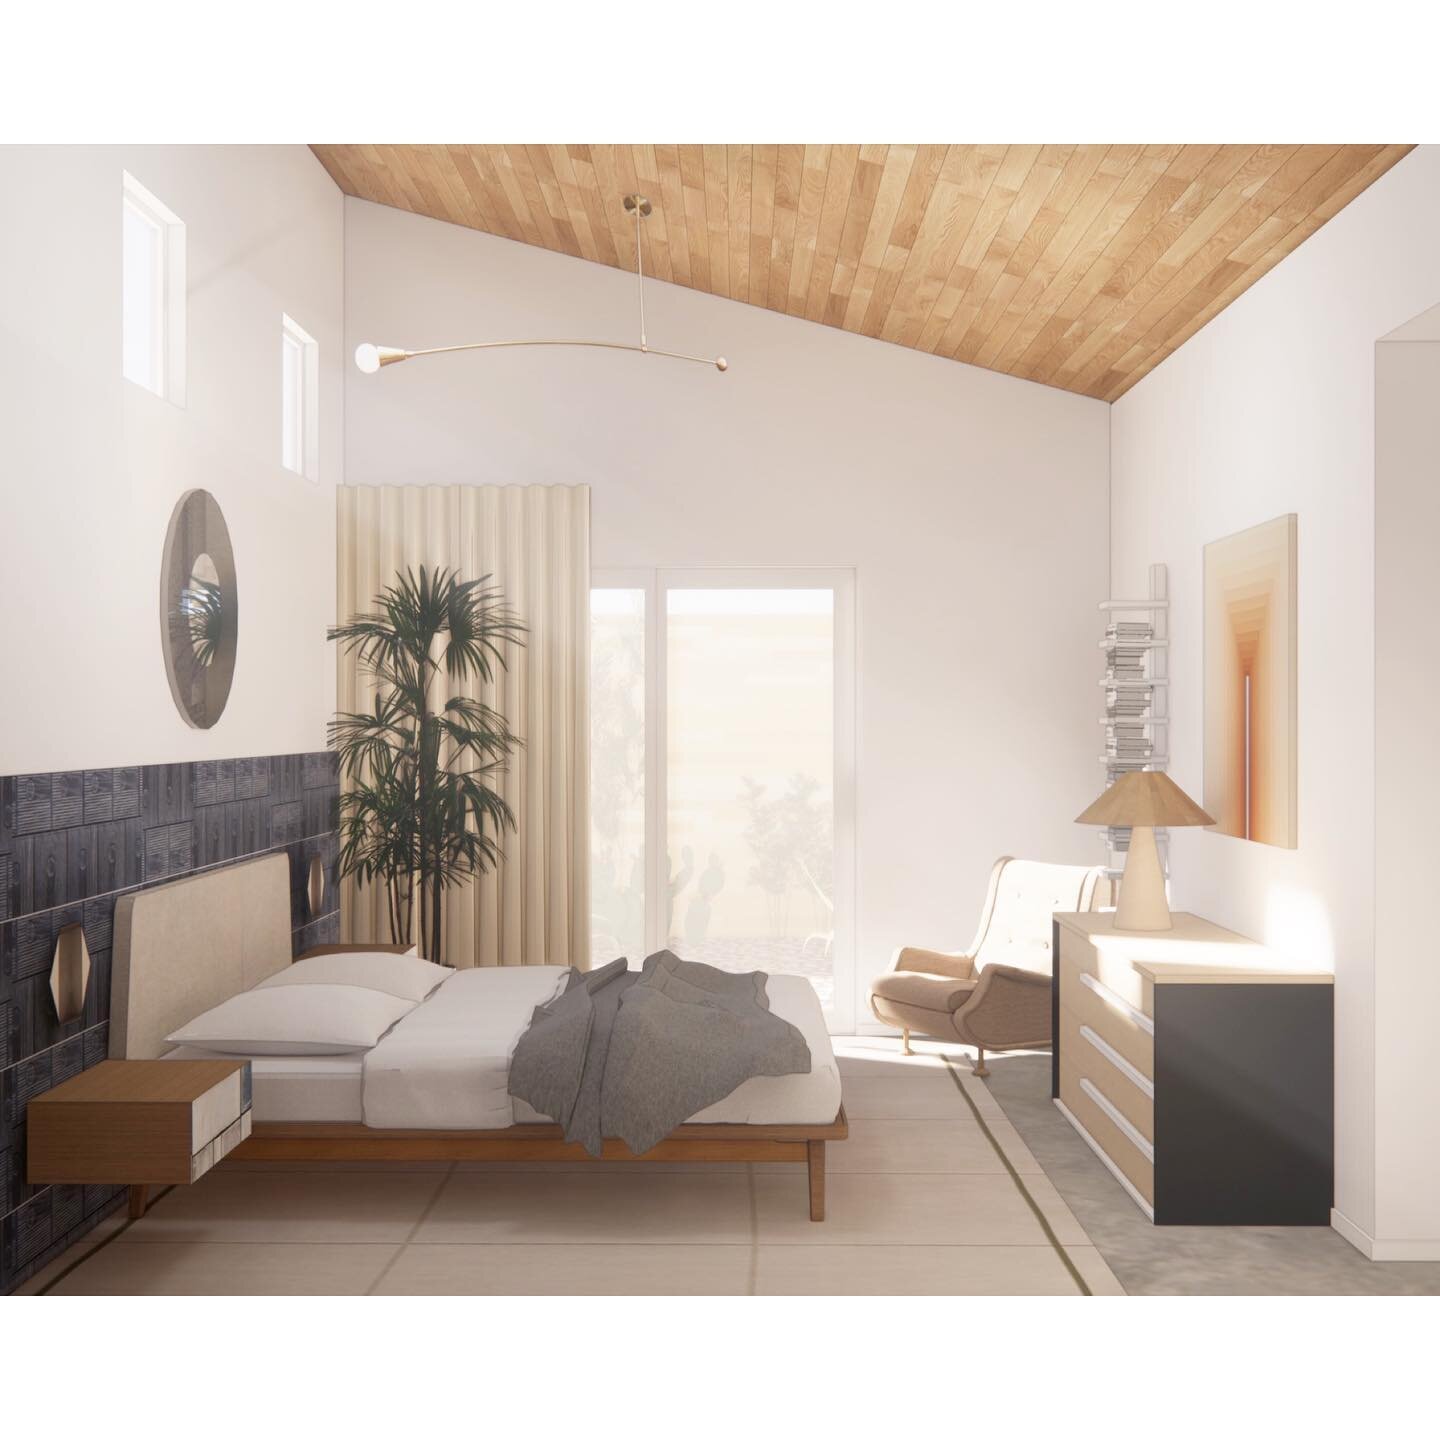 project southtown | clean modern and some fun plays on geometry for the primary bedroom ◻️▫️◽️

#sanantoniointeriordesign #dayatelier #sanantonio #interiordesign #architecture  #design #interior #homedecor #decor #interiors #vintageinteriors #eclecti